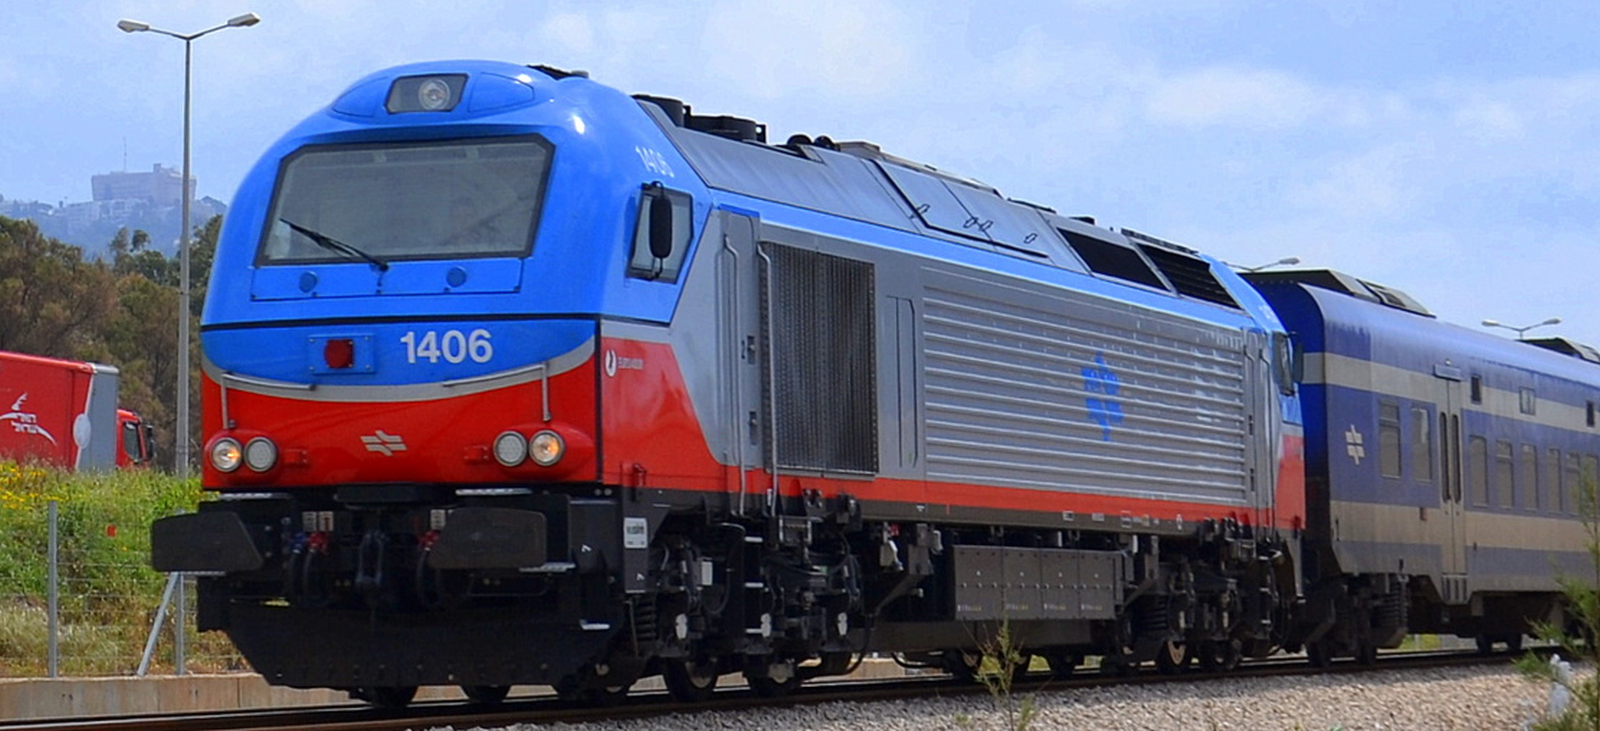 Euro 4000 passenger variant as No. 1206 of Israel Railways in April 2012 in Haifa